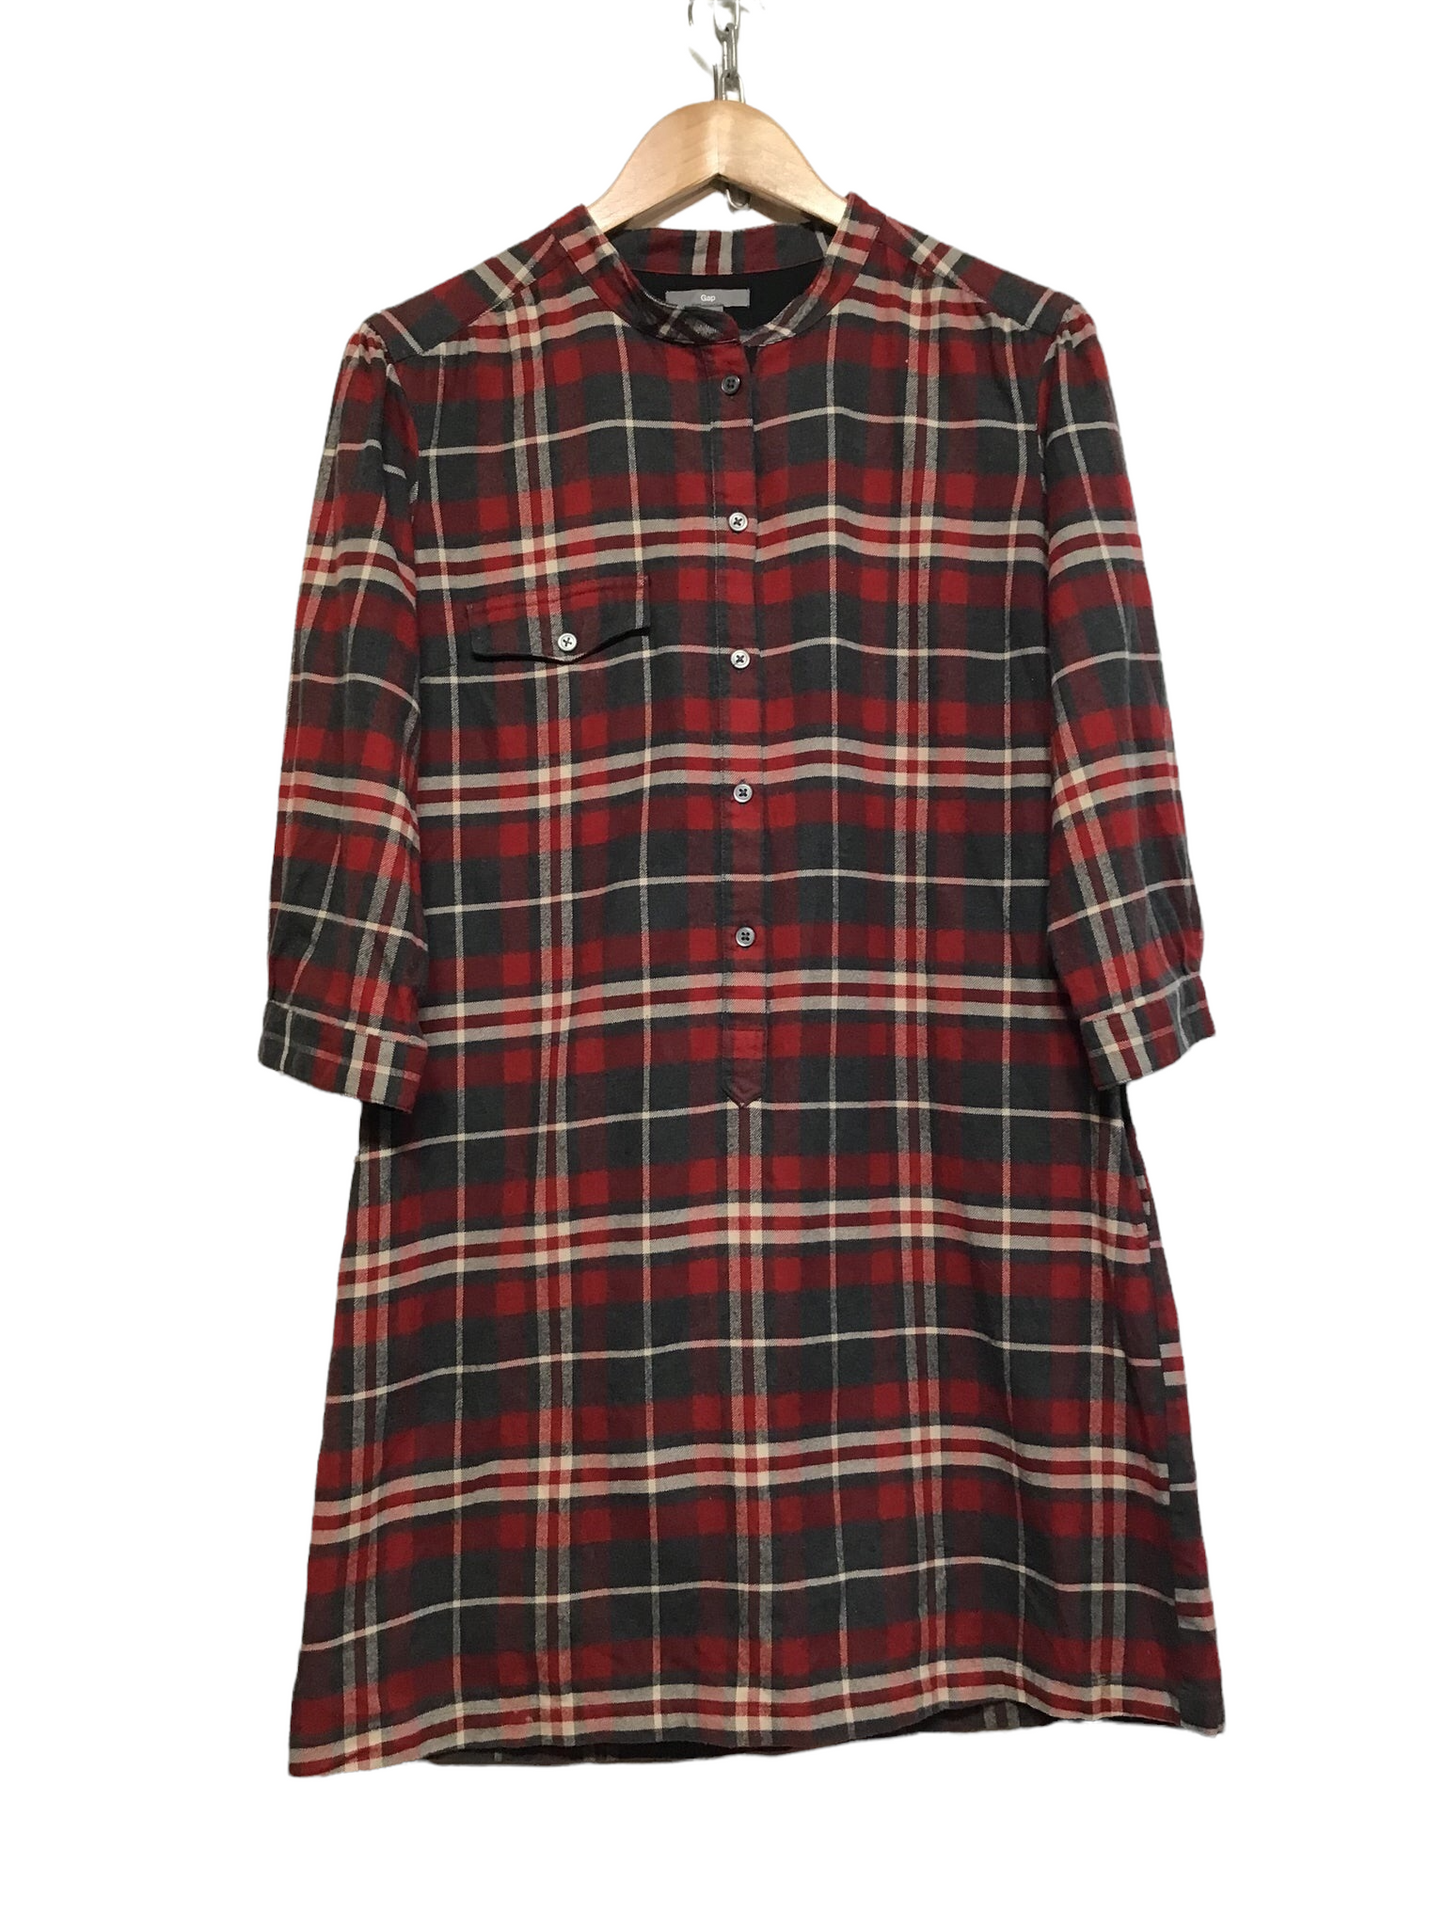 Gap Checkered Dress (Size M)